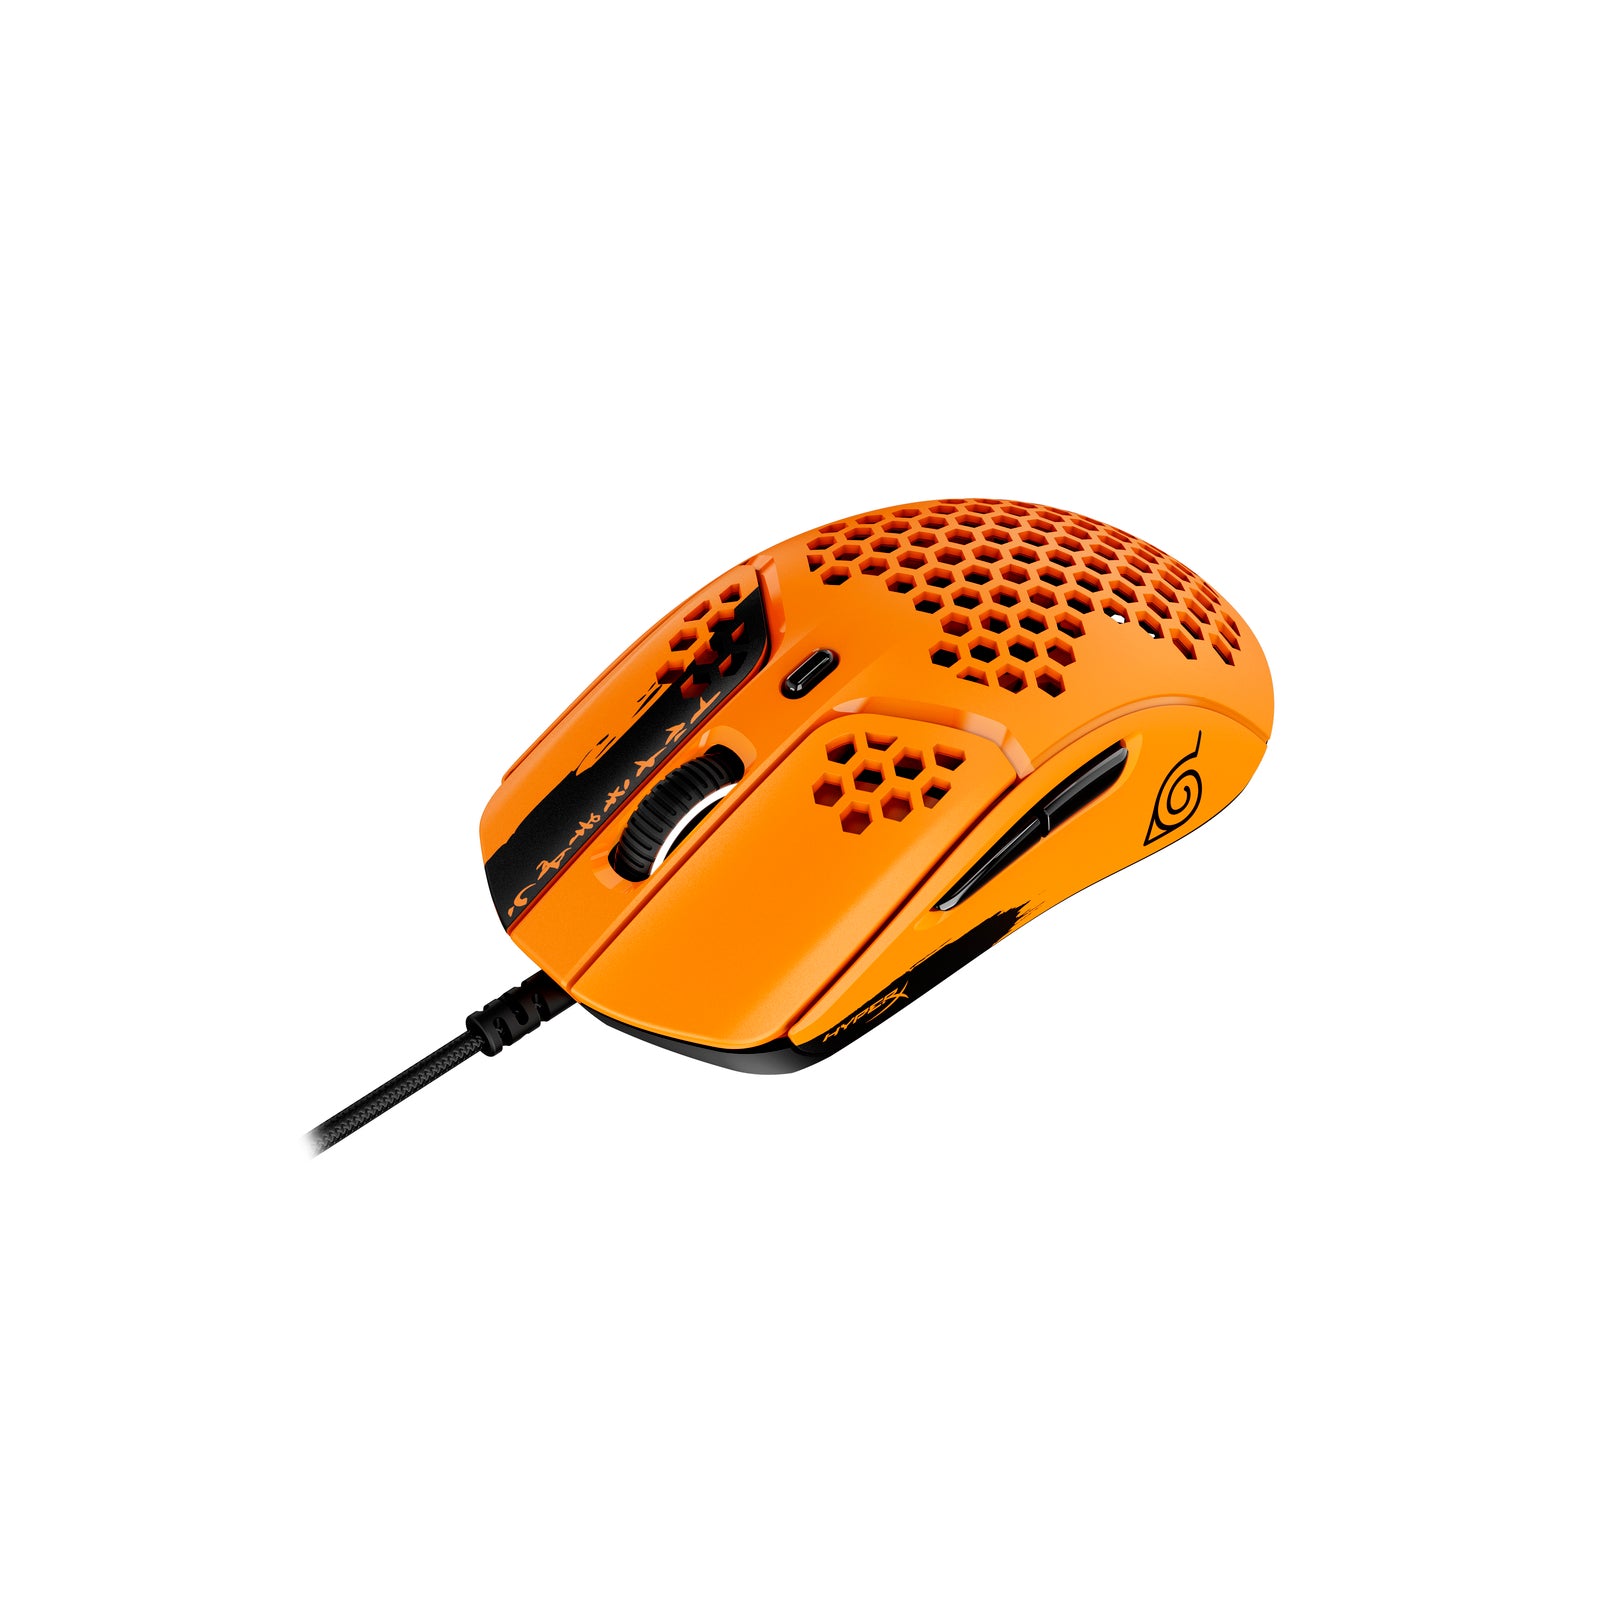 HyperX Pulsefire Haste - Naruto Edition - Gaming Mouse